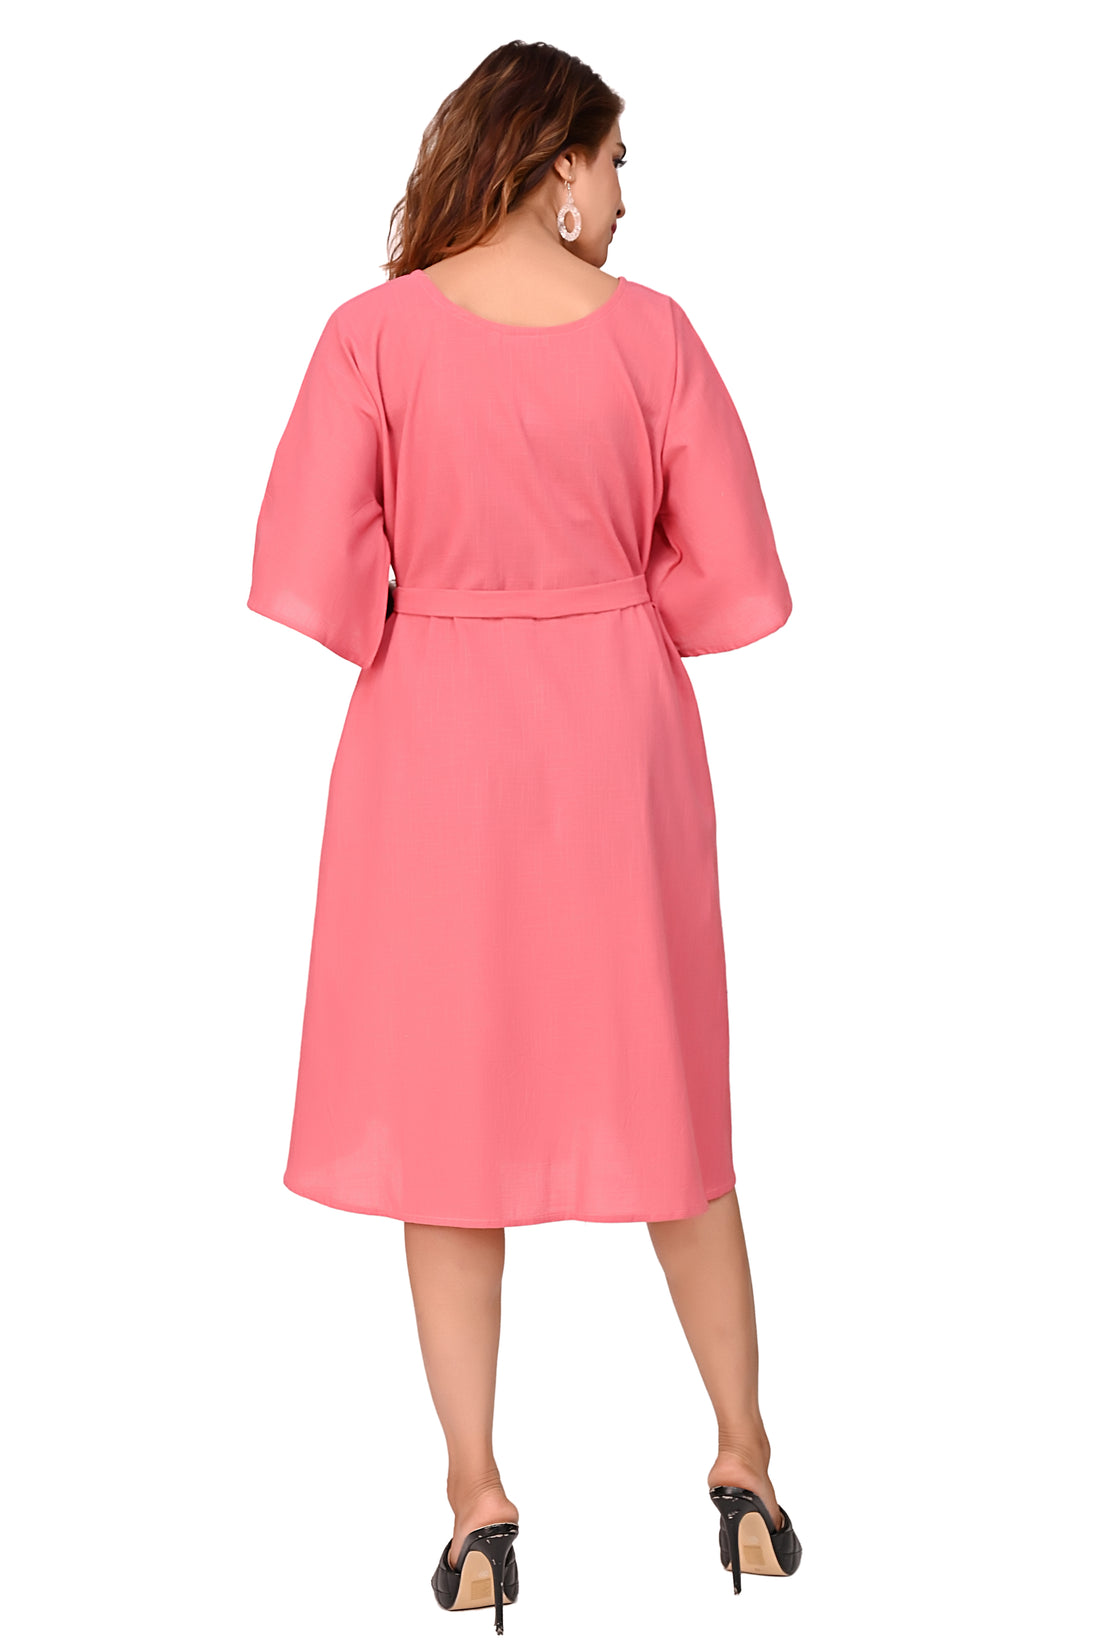 Premium Quality Cotton Slub Tunic Dress for Women in Coral Pink Colour